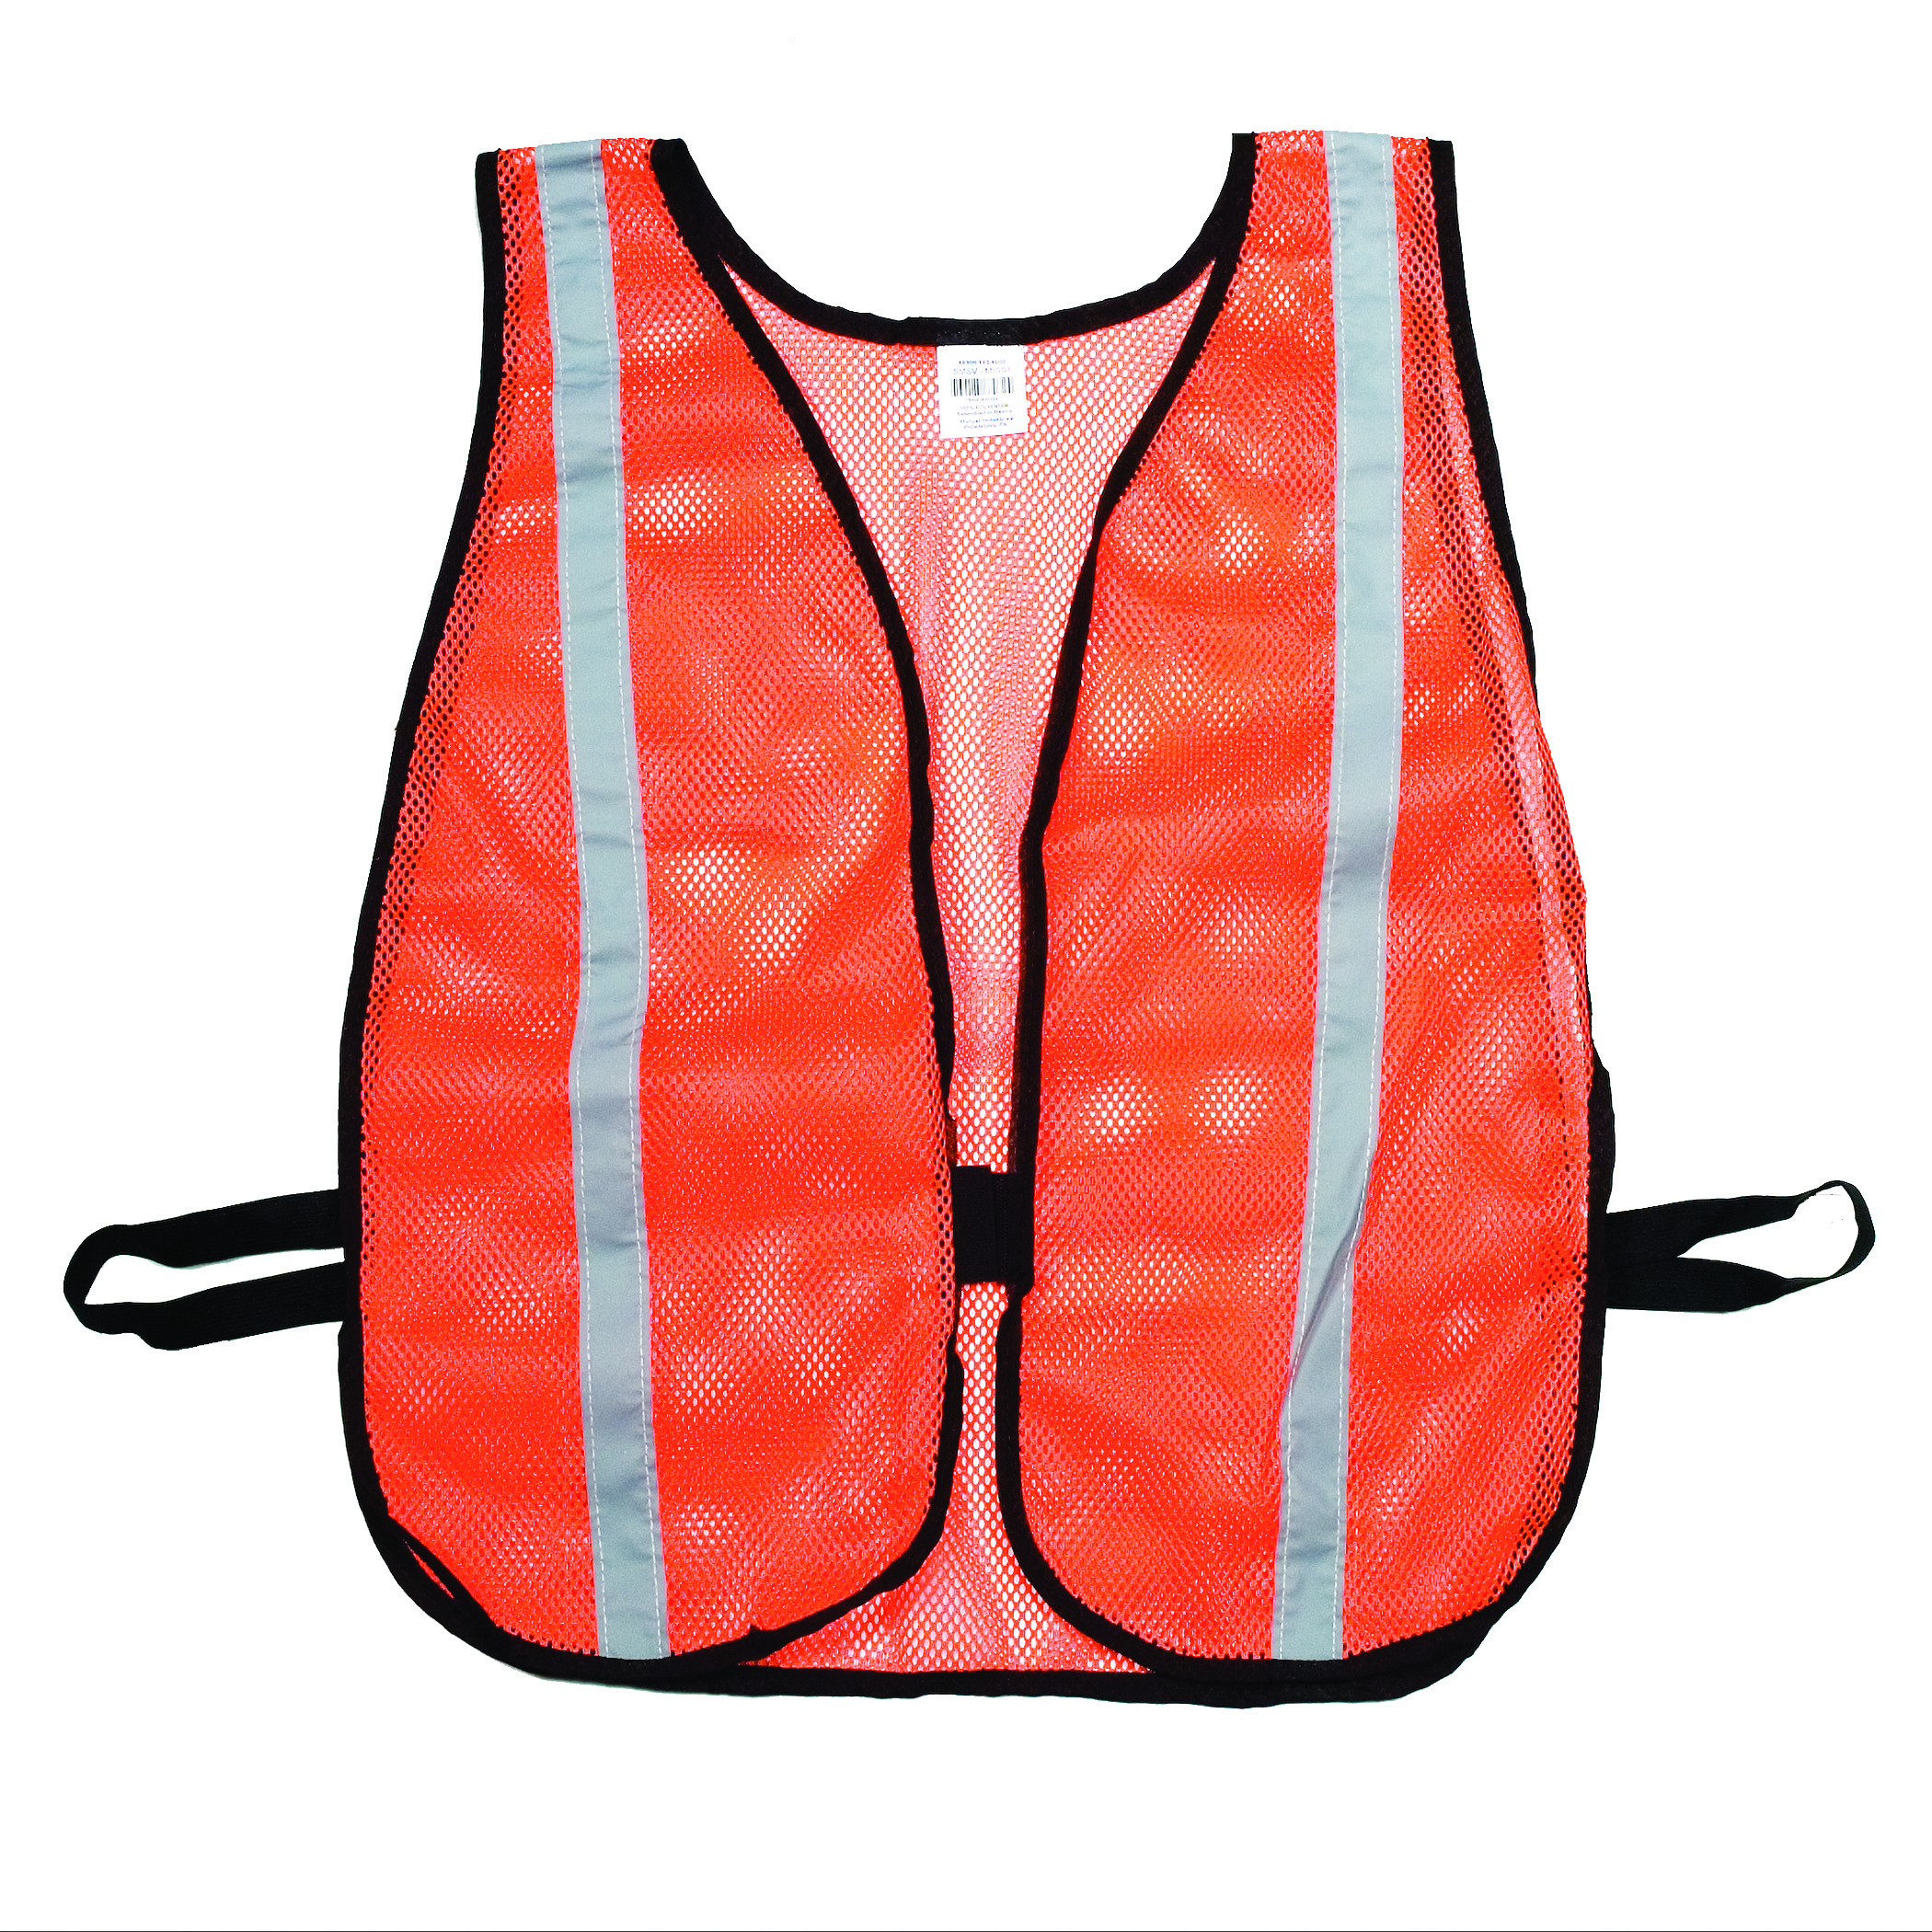 16300-53-1000, Orange Soft Mesh Safety Vest - 1 Silver Reflective, MutualIndustries